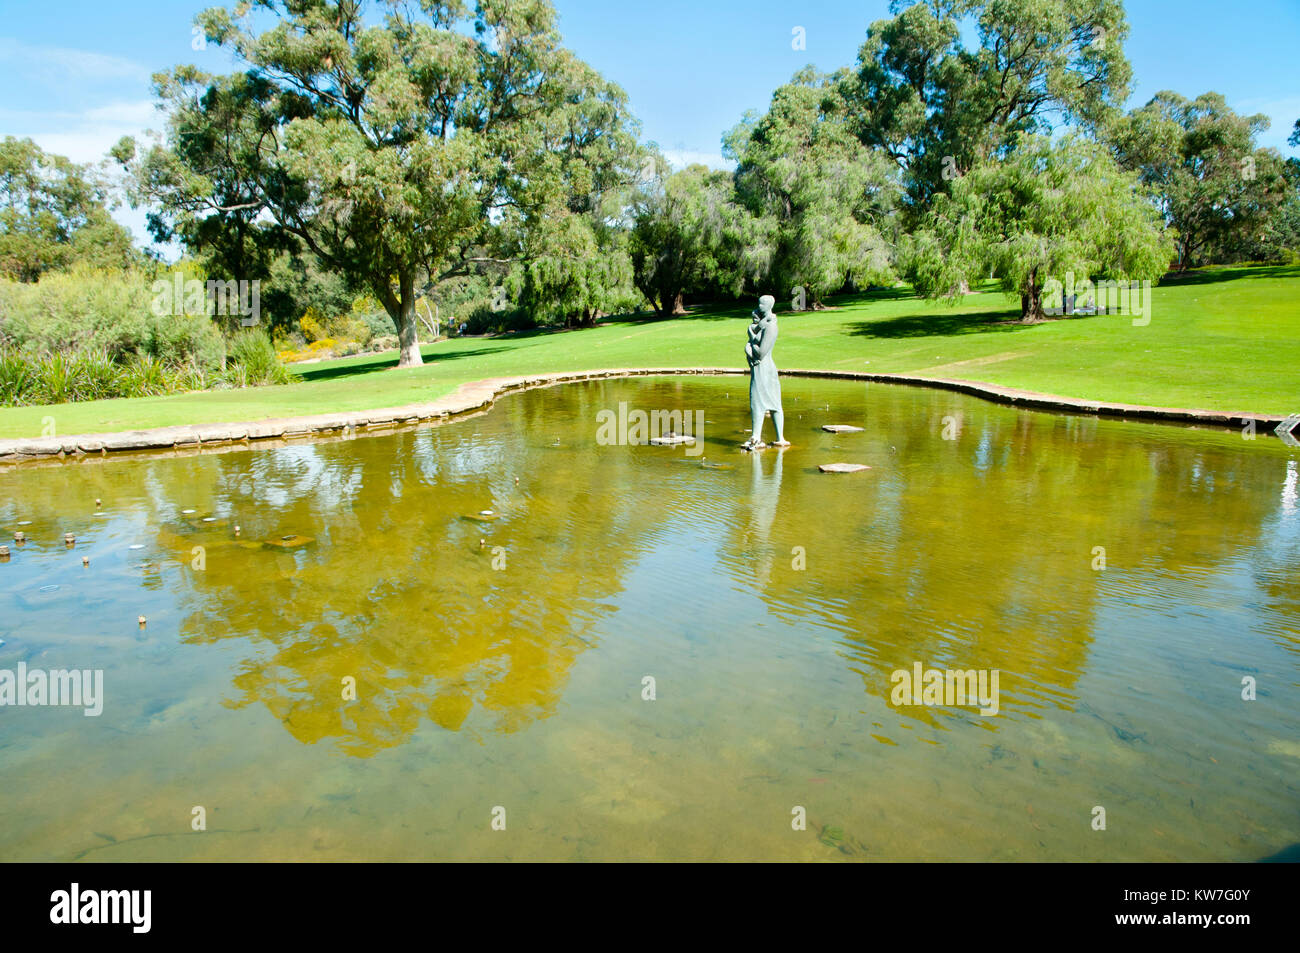 Kings Park - Perth - Australia Stock Photo